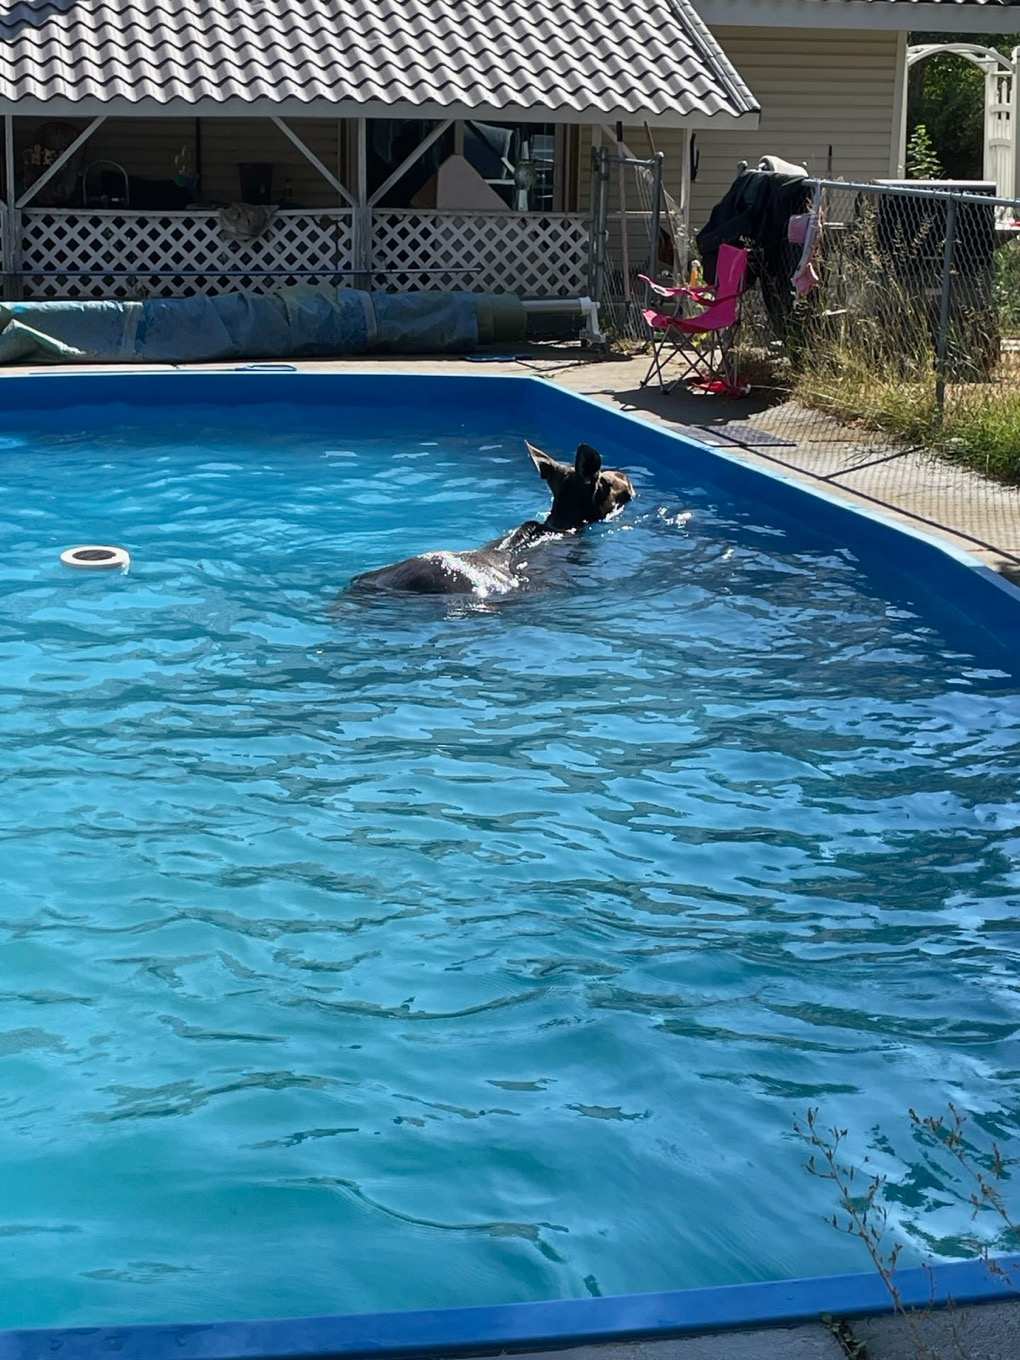 Moose caught taking a dip in resident’s swimming pool, Washington photos show